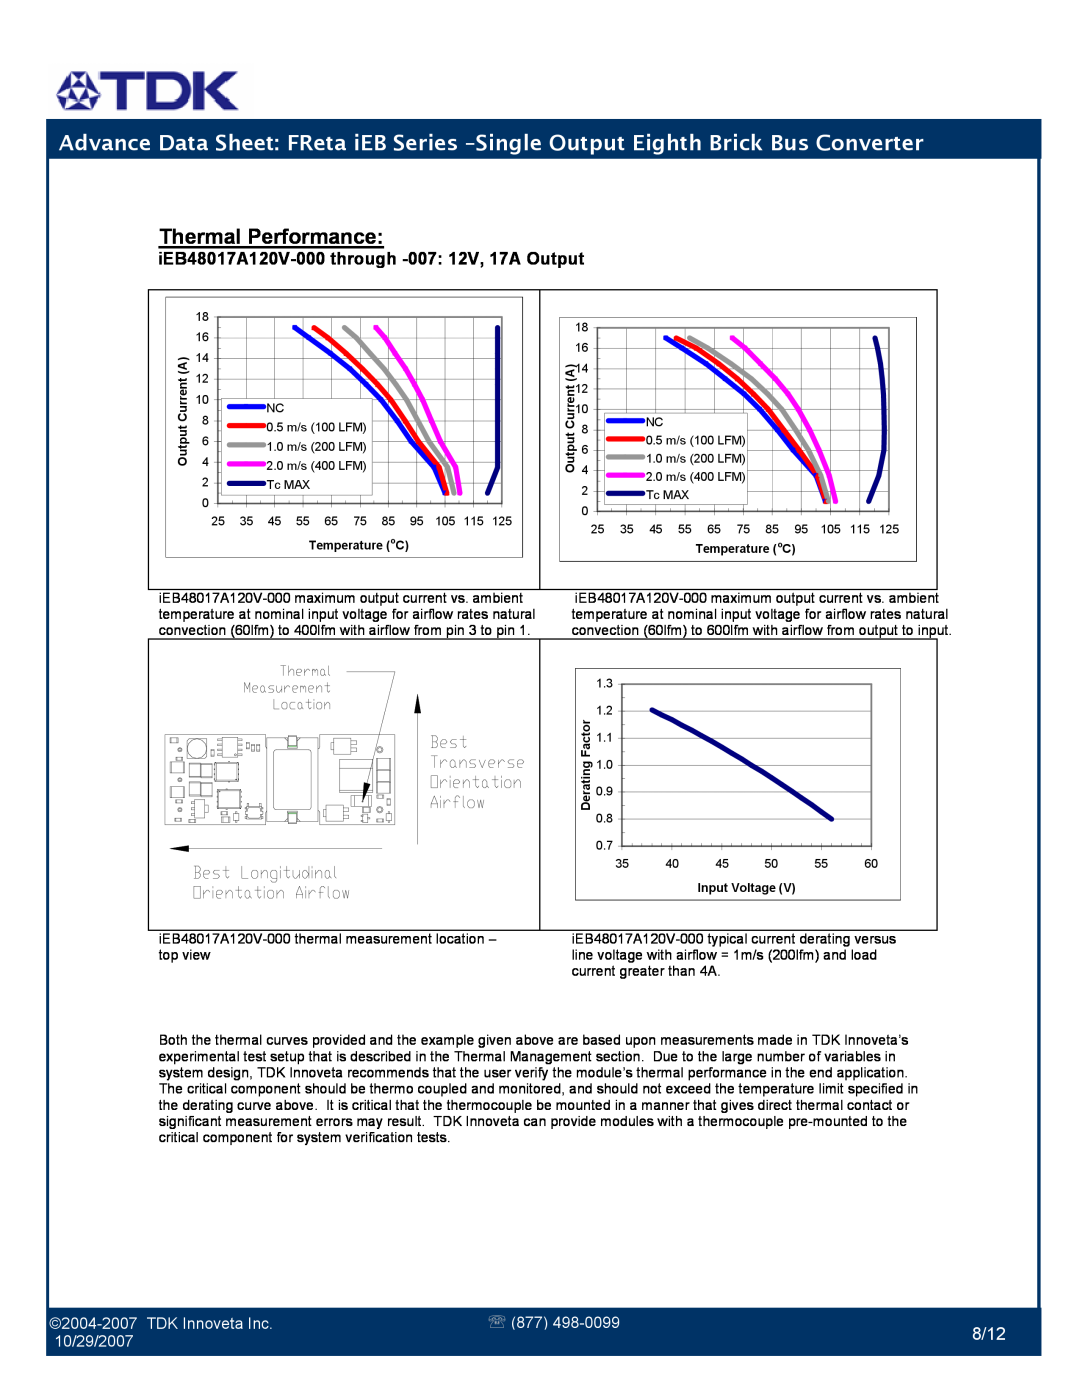 TDK iEB Series manual Thermal Performance, 8/12, TDK Innoveta Inc, 10/29/2007 